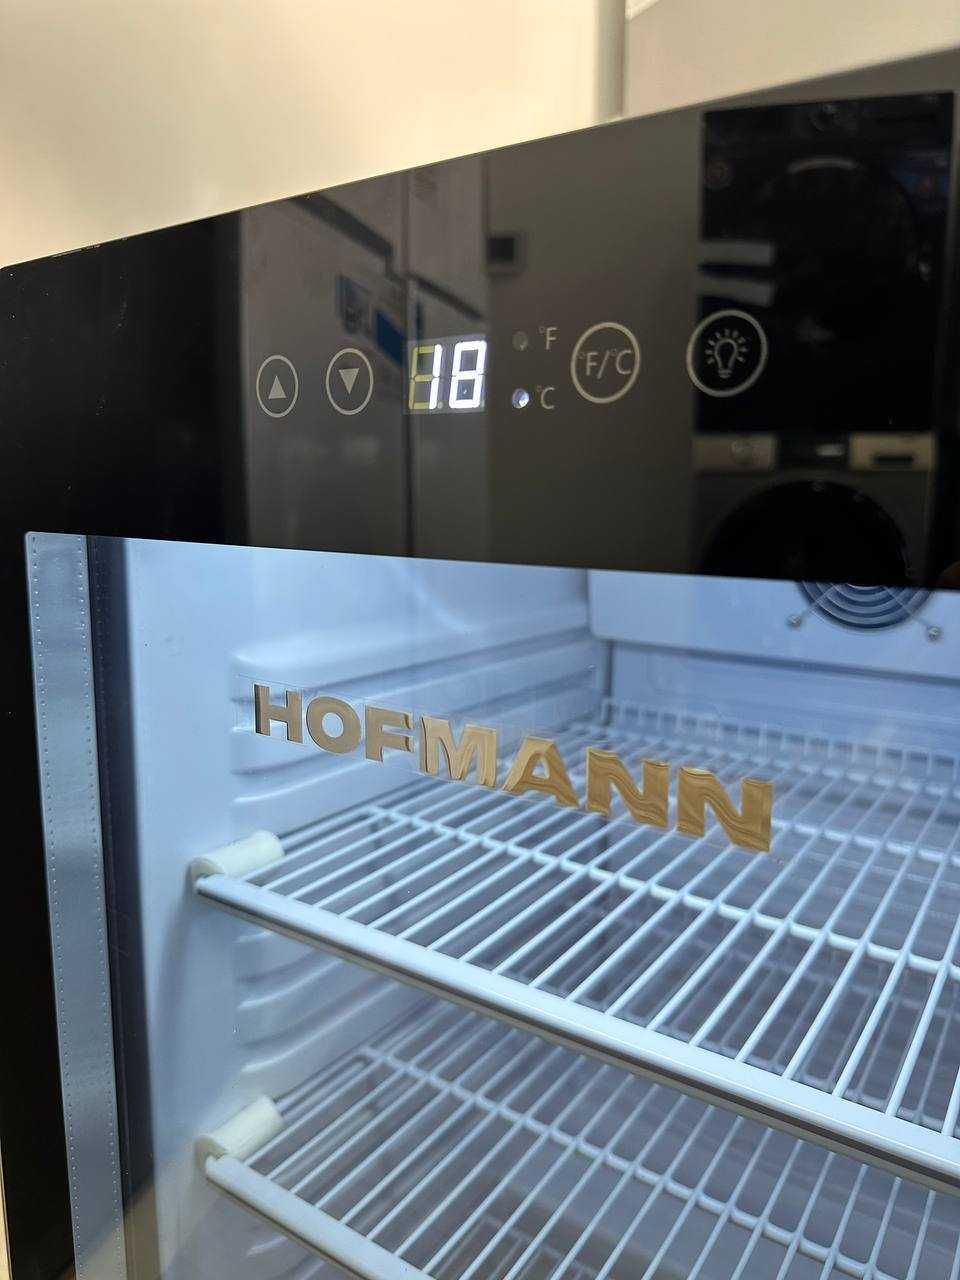 Мини Холодильник Hofmann HBC-136HF